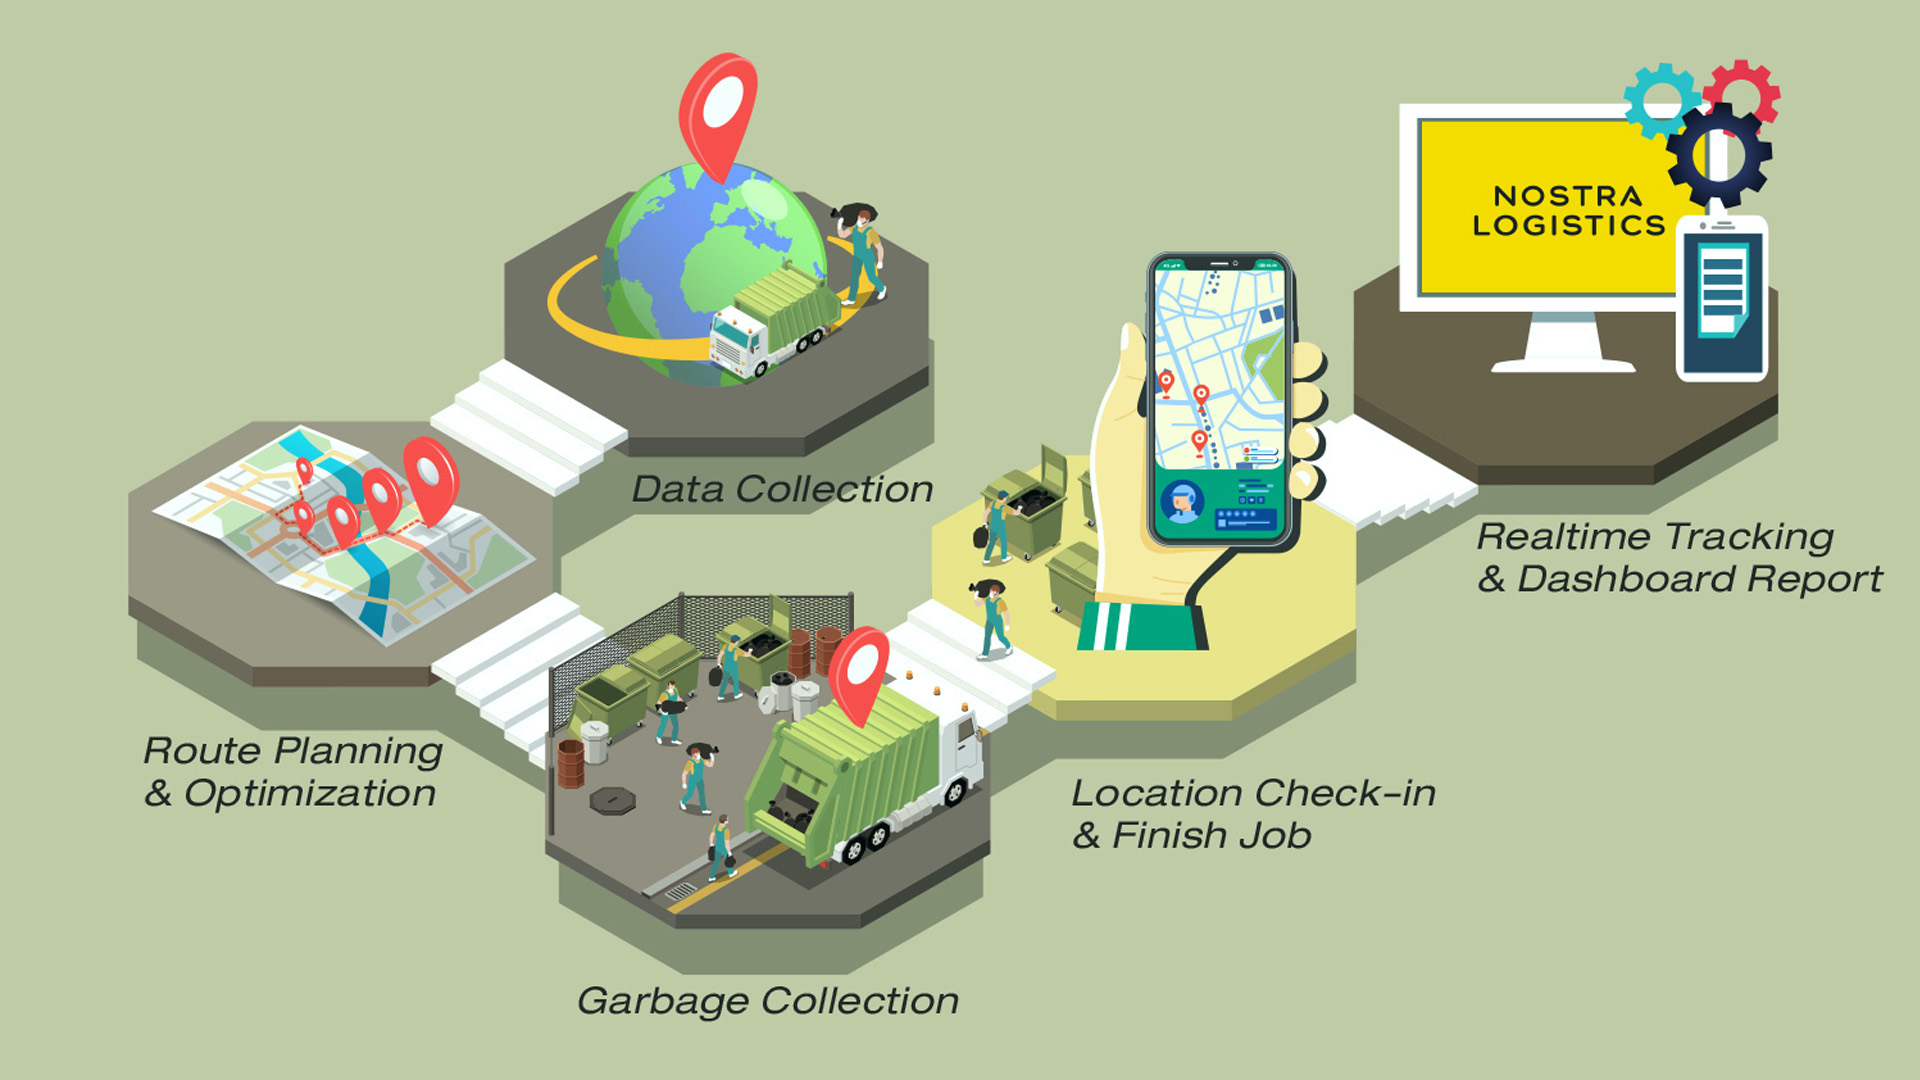 NOSTRA ชูเทคโนโลยีเพิ่มประสิทธิภาพระบบขนส่งขยะ Waste Management System หนุนดูแลสิ่งแวดล้อมยั่งยืน